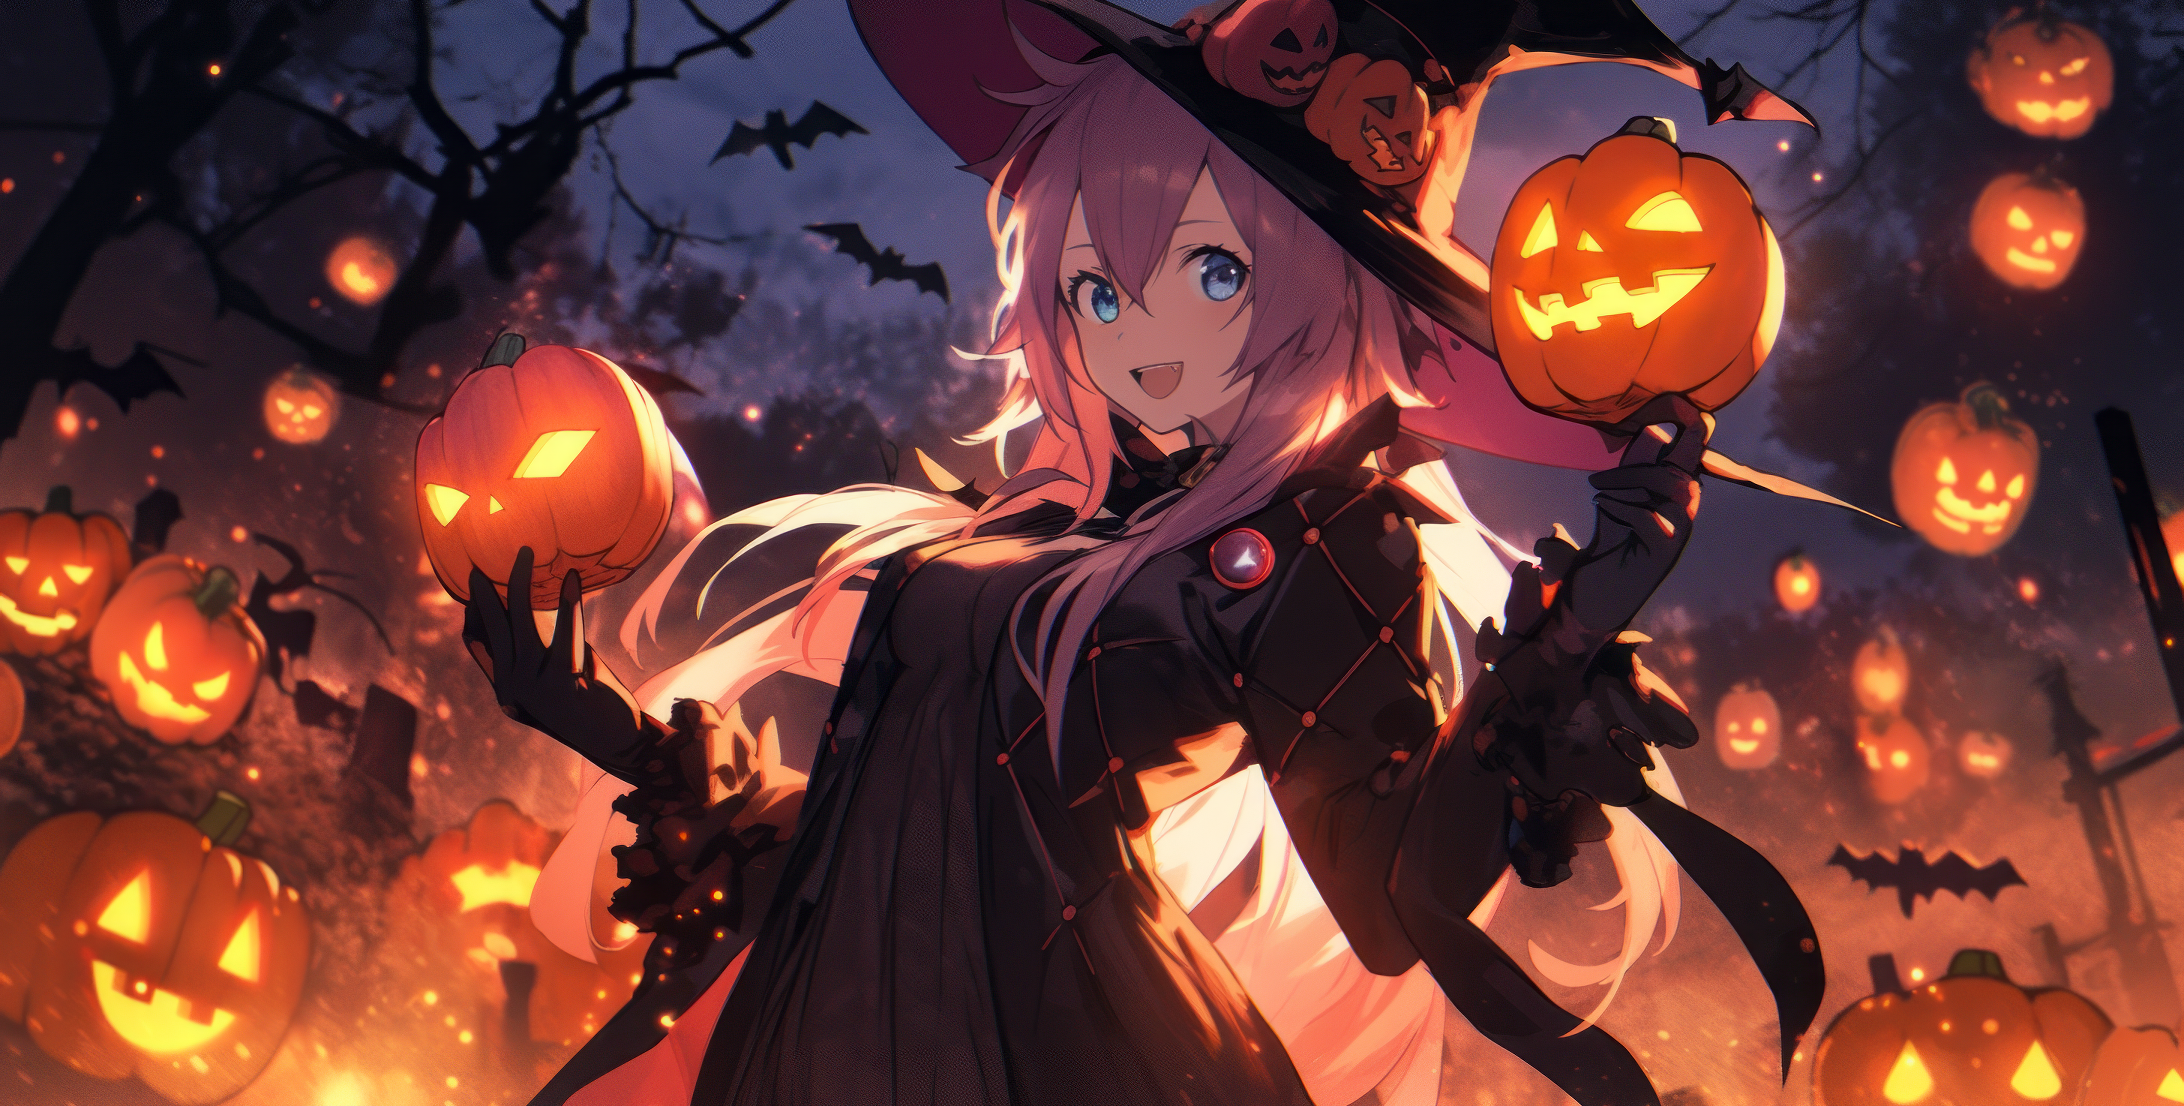 Anime Girl In Halloween Costume Wallpaper by patrika